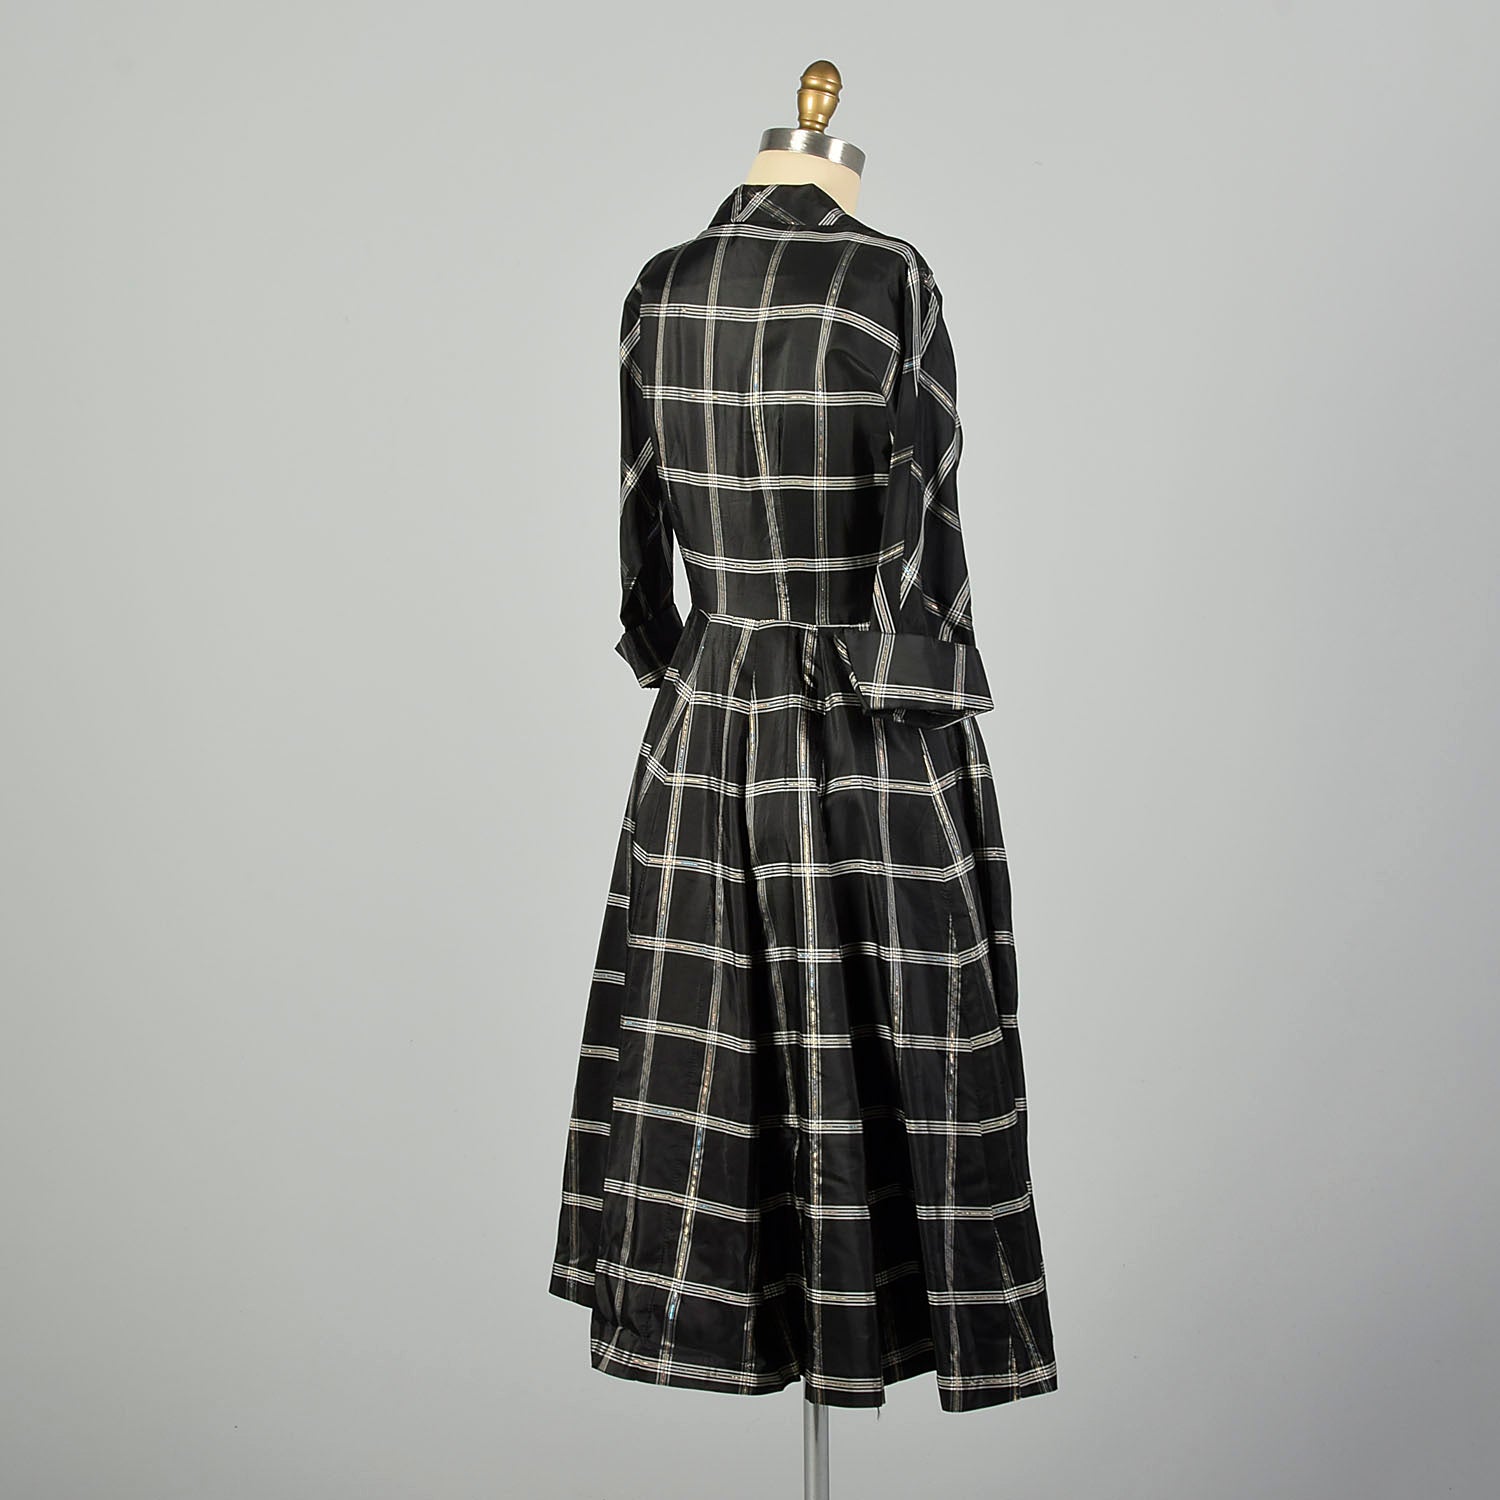 Medium 1950s Dress Black Taffeta Hourglass Plaid Cocktail Party Dress